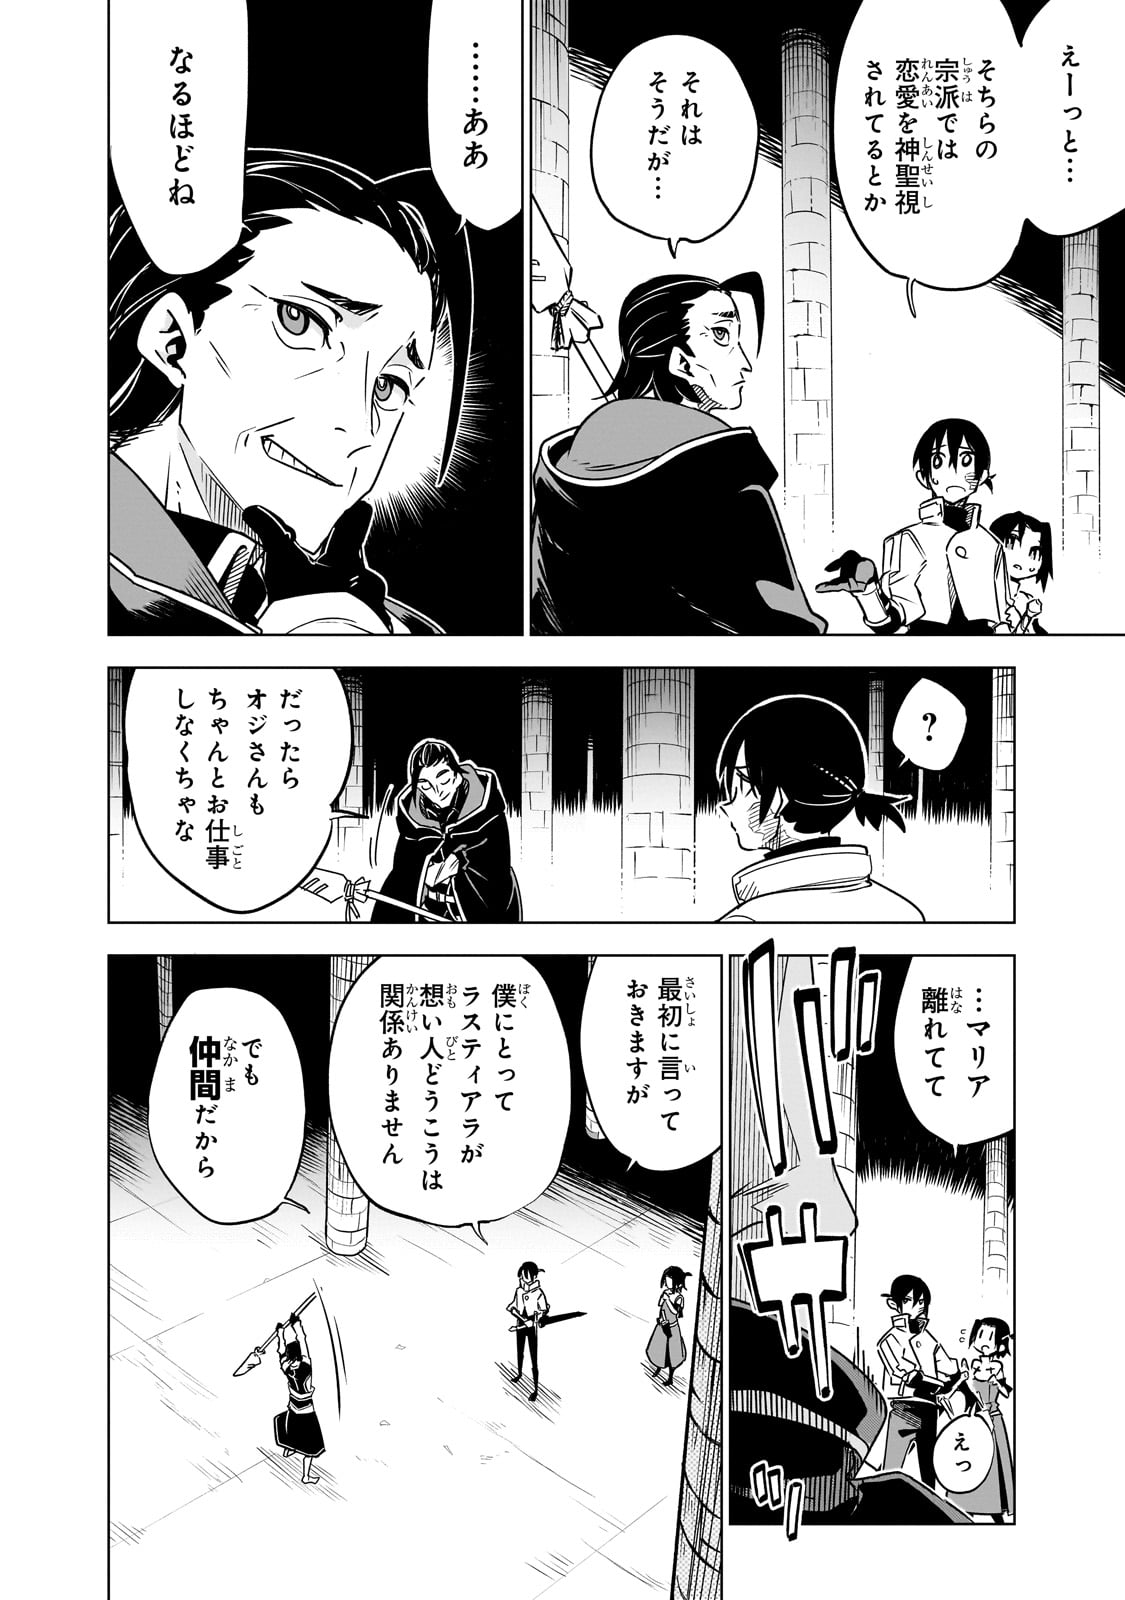 Isekai Meikyuu no Saishinbu o Mezasou - Chapter 29 - Page 4